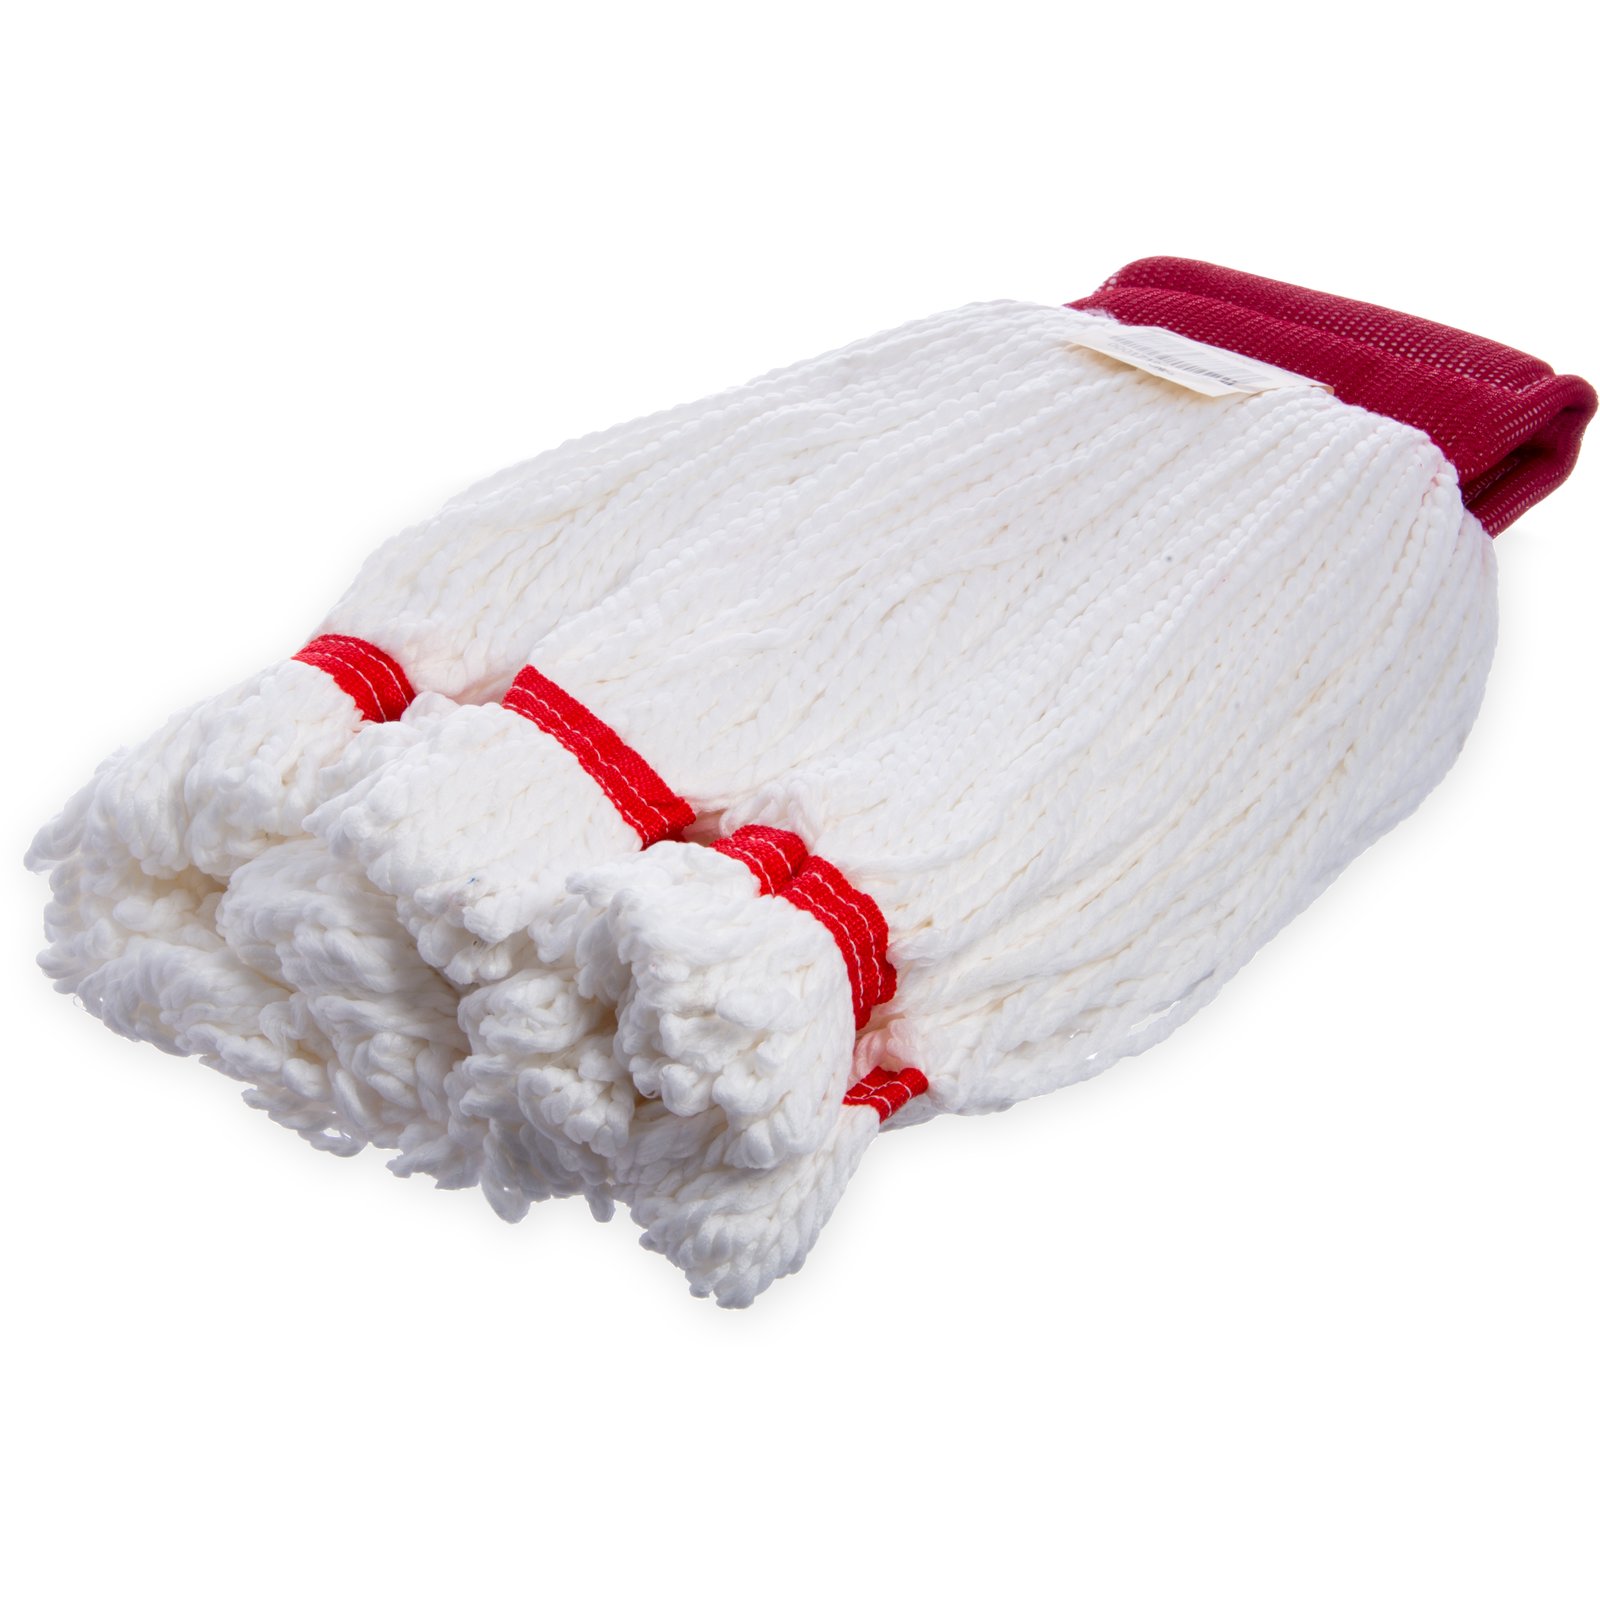 The Cotton String Mop vs Microfiber Mop